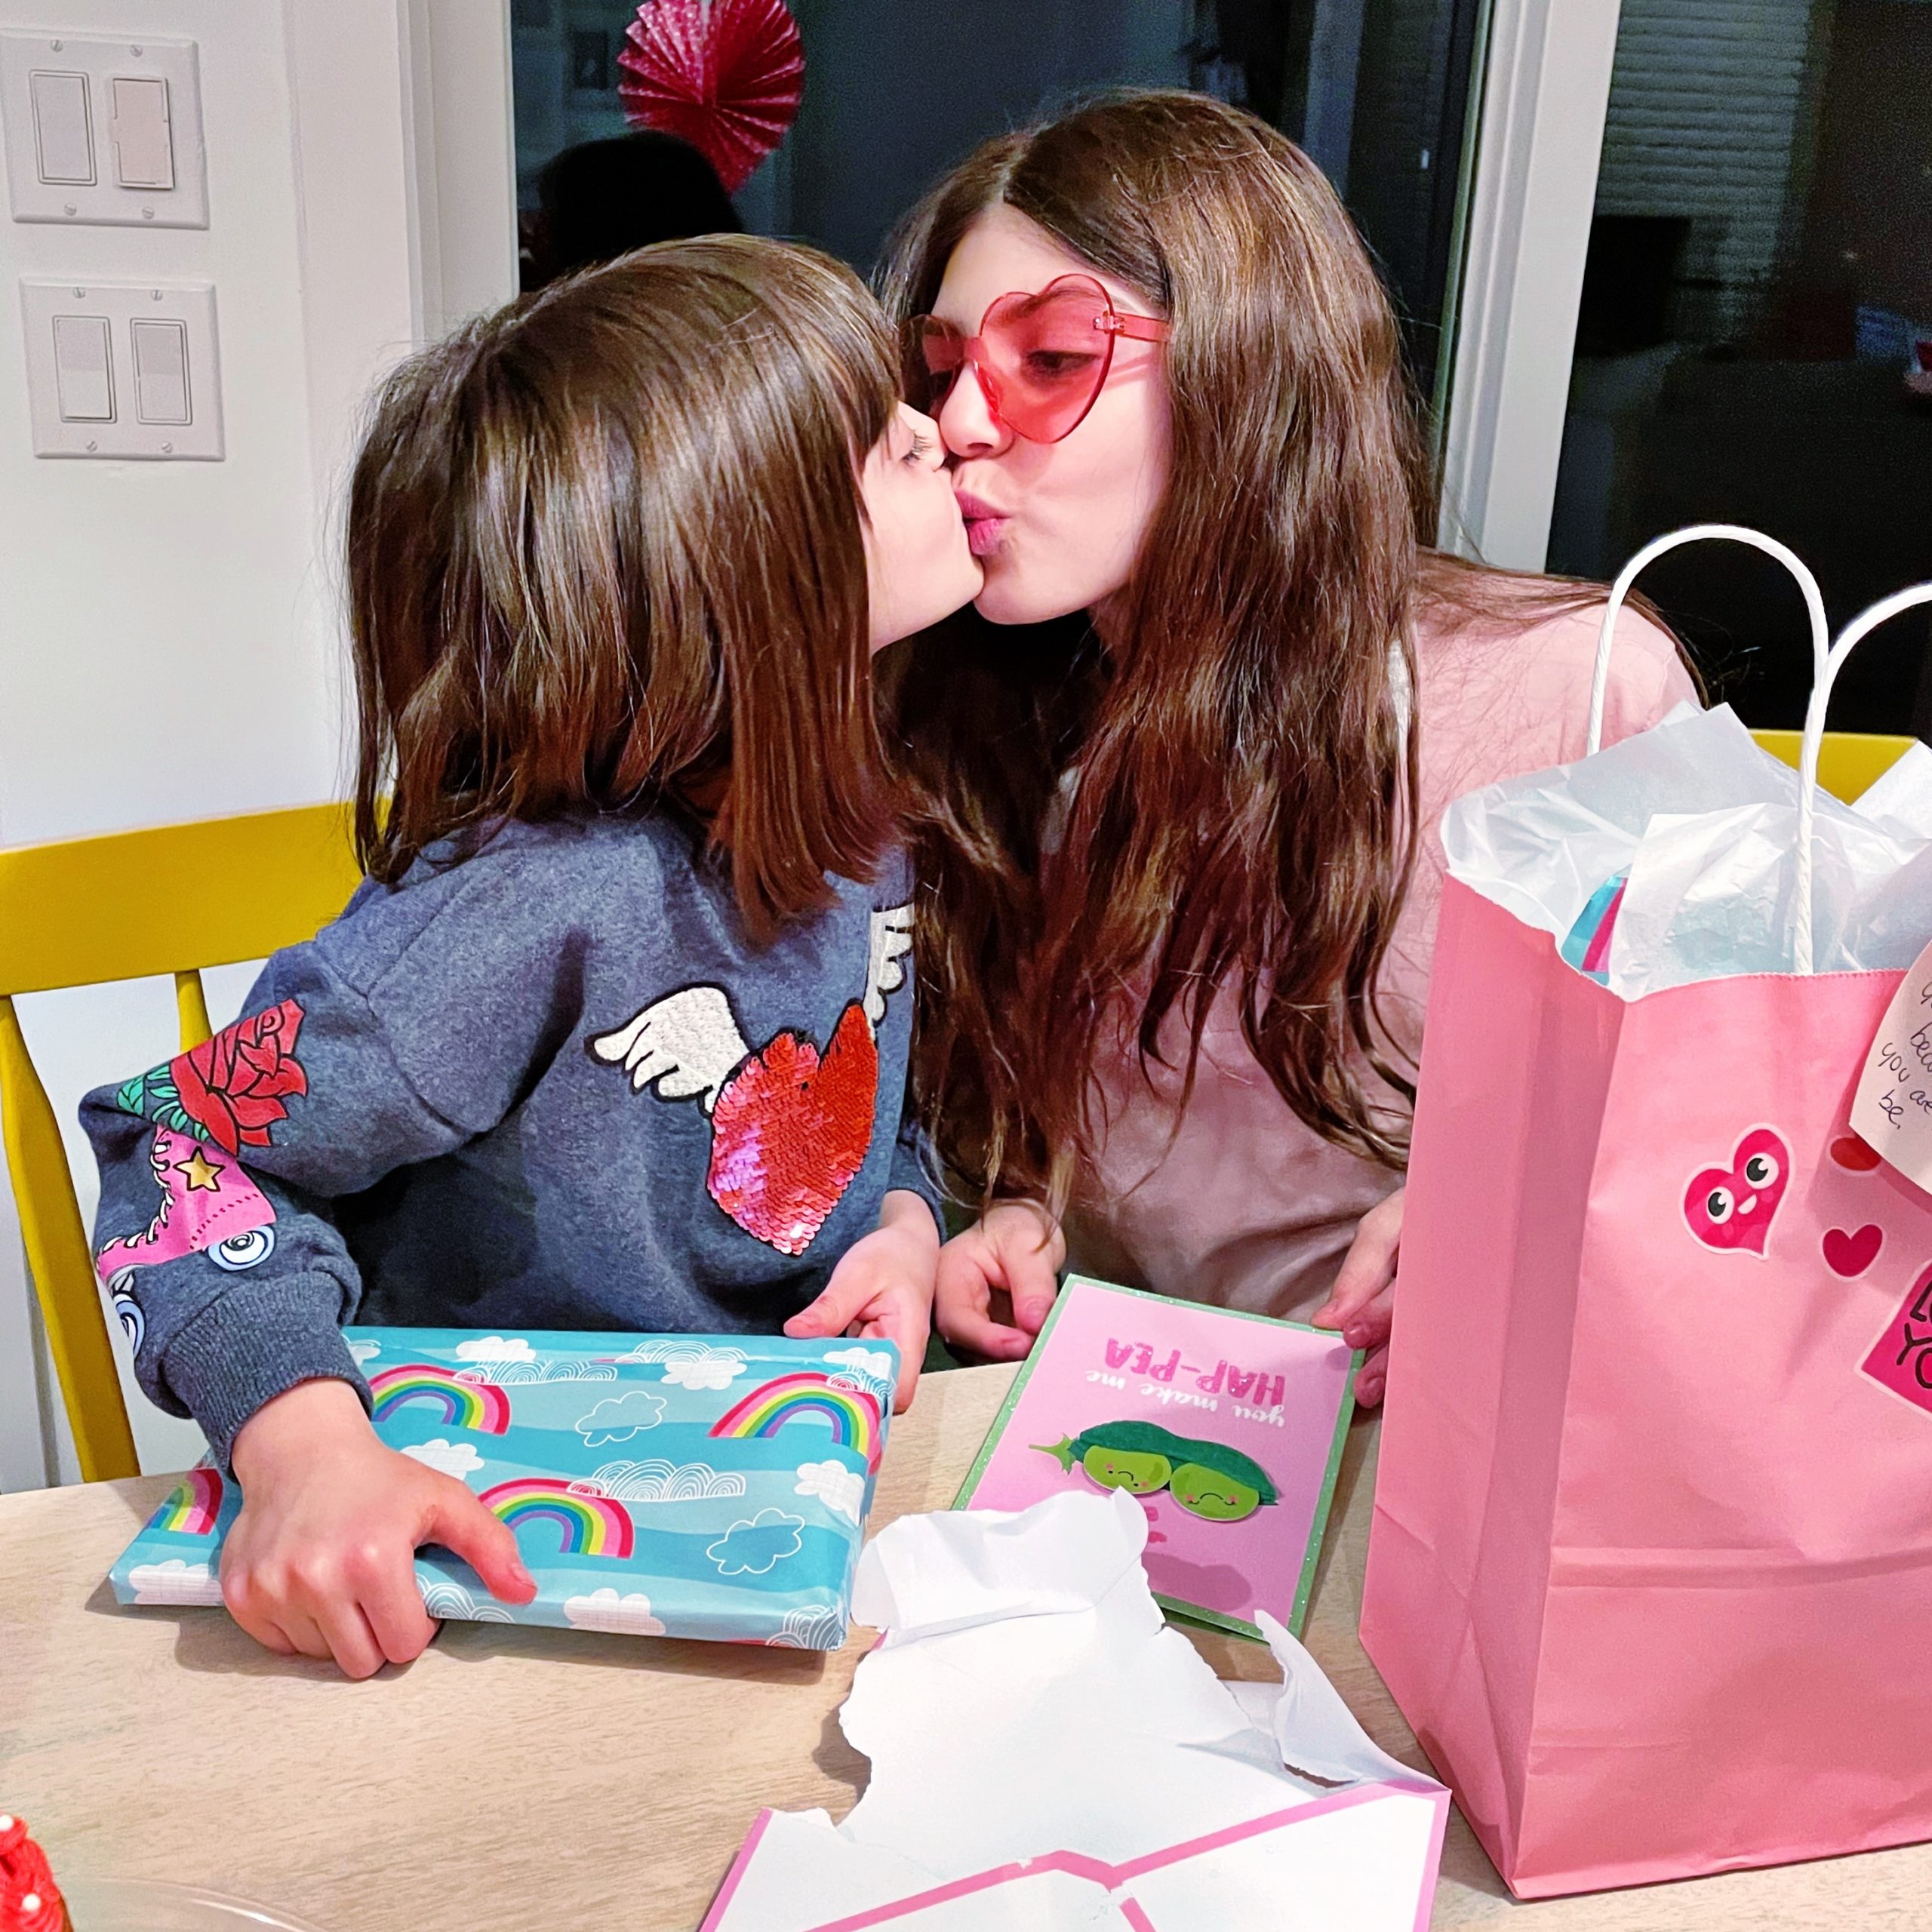 Heart Lantern Craft Kits For Girls, Valentines Day Gifts Kids